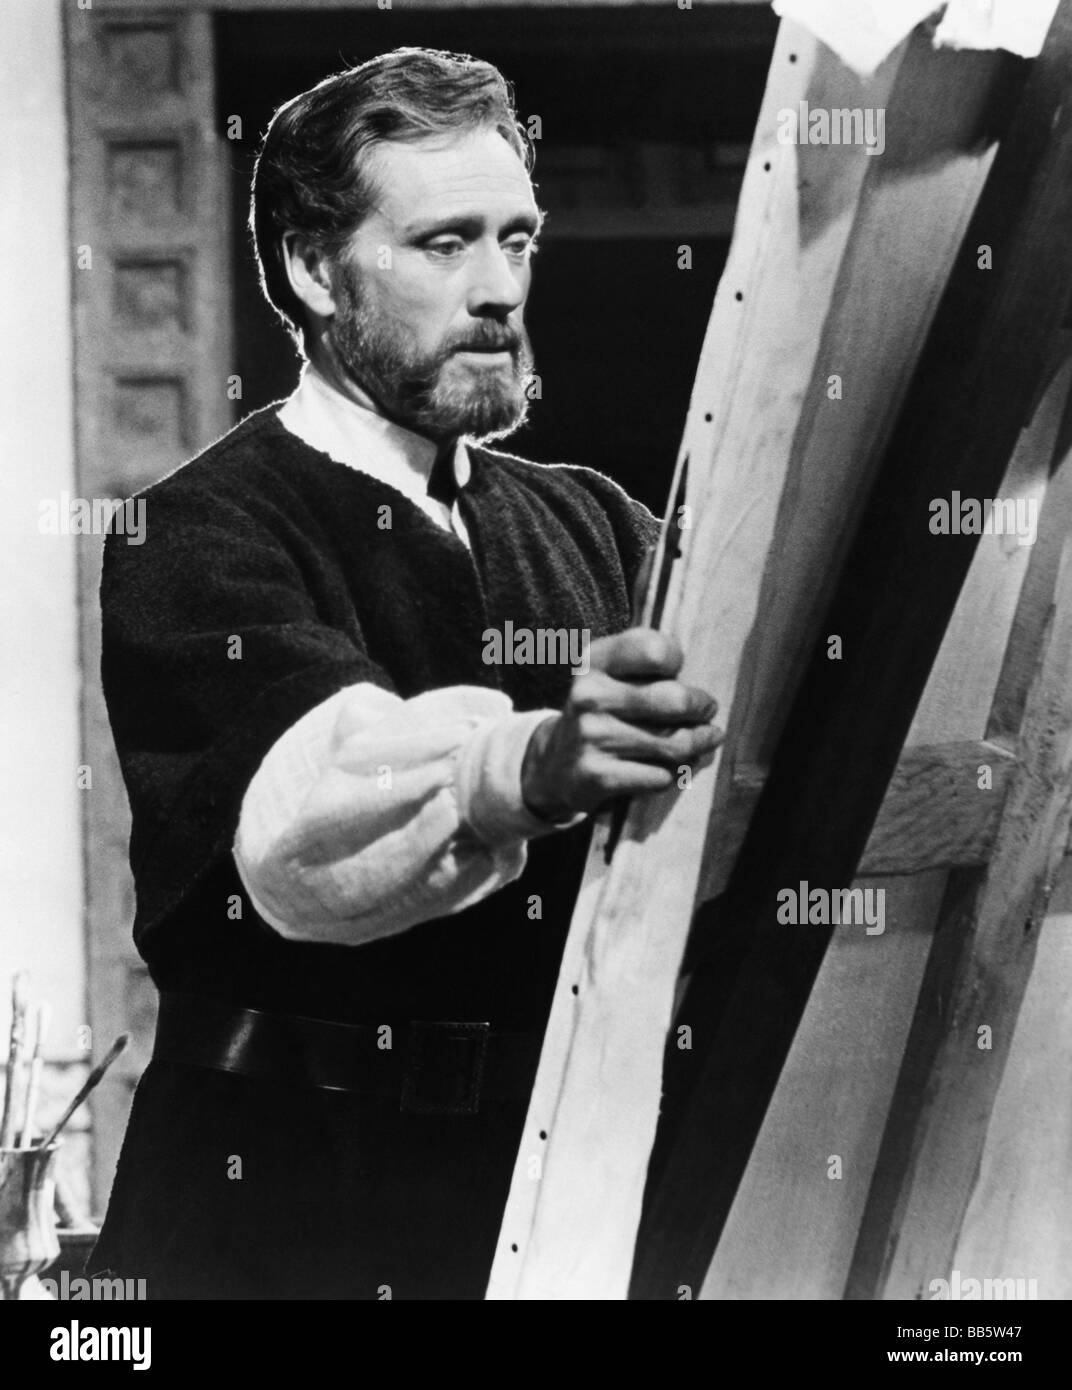 movie, 'El Greco', ESP/ITA/FRA 1966, director: Luciano Salce, scene with: Mel Ferrer (El Greco), Third-Party-Permissions-Neccessary Stock Photo